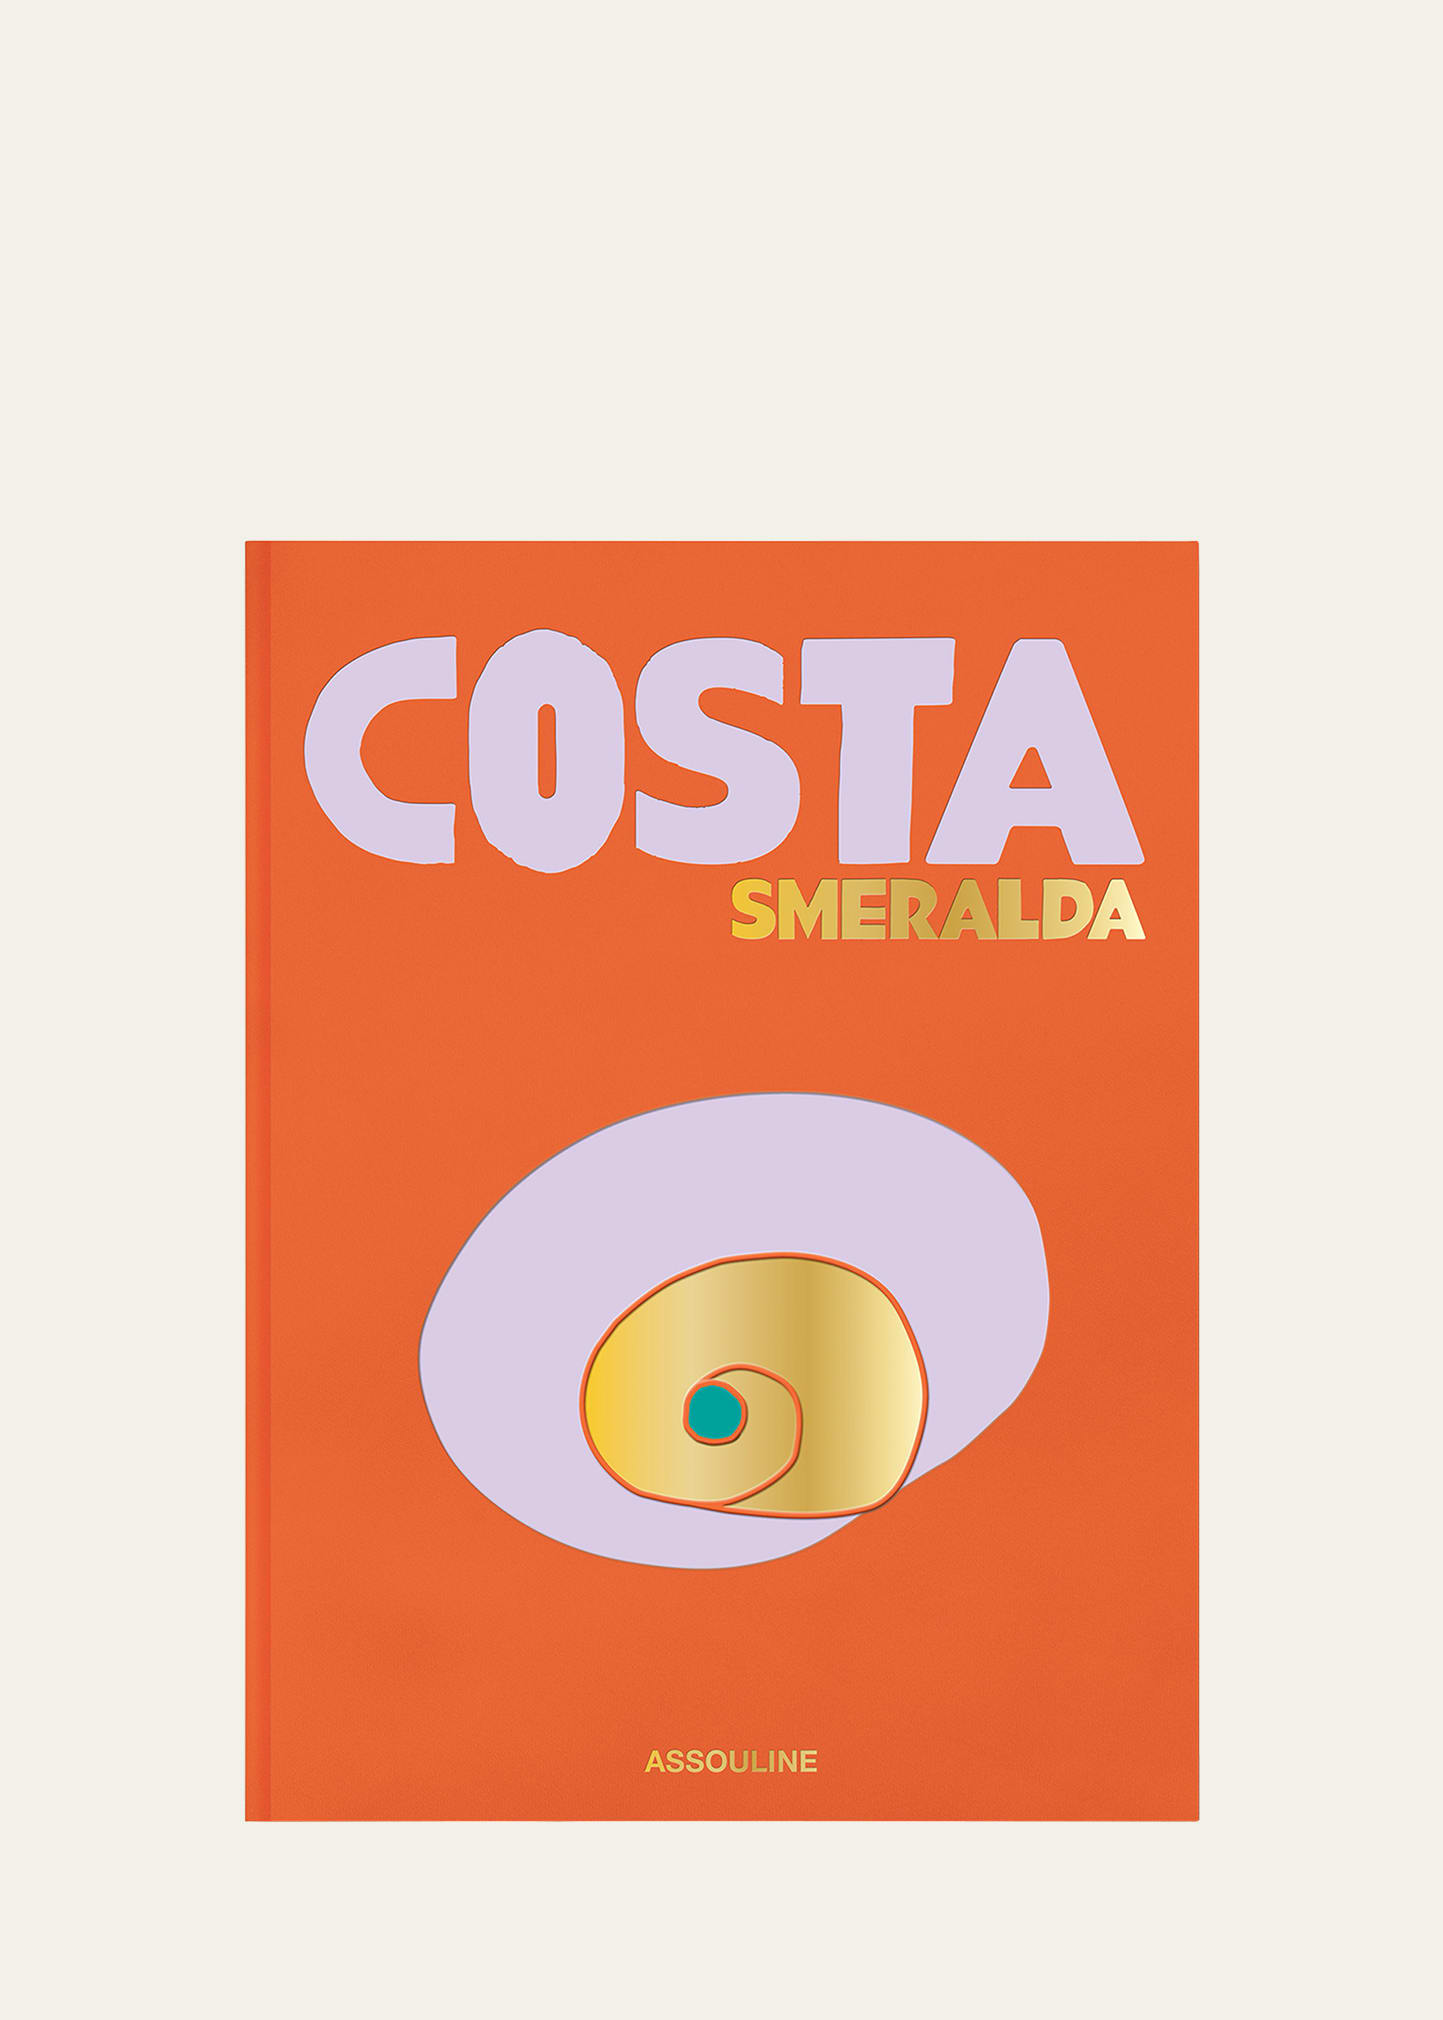 Costa Smeralda Book by Cesare Cunaccia